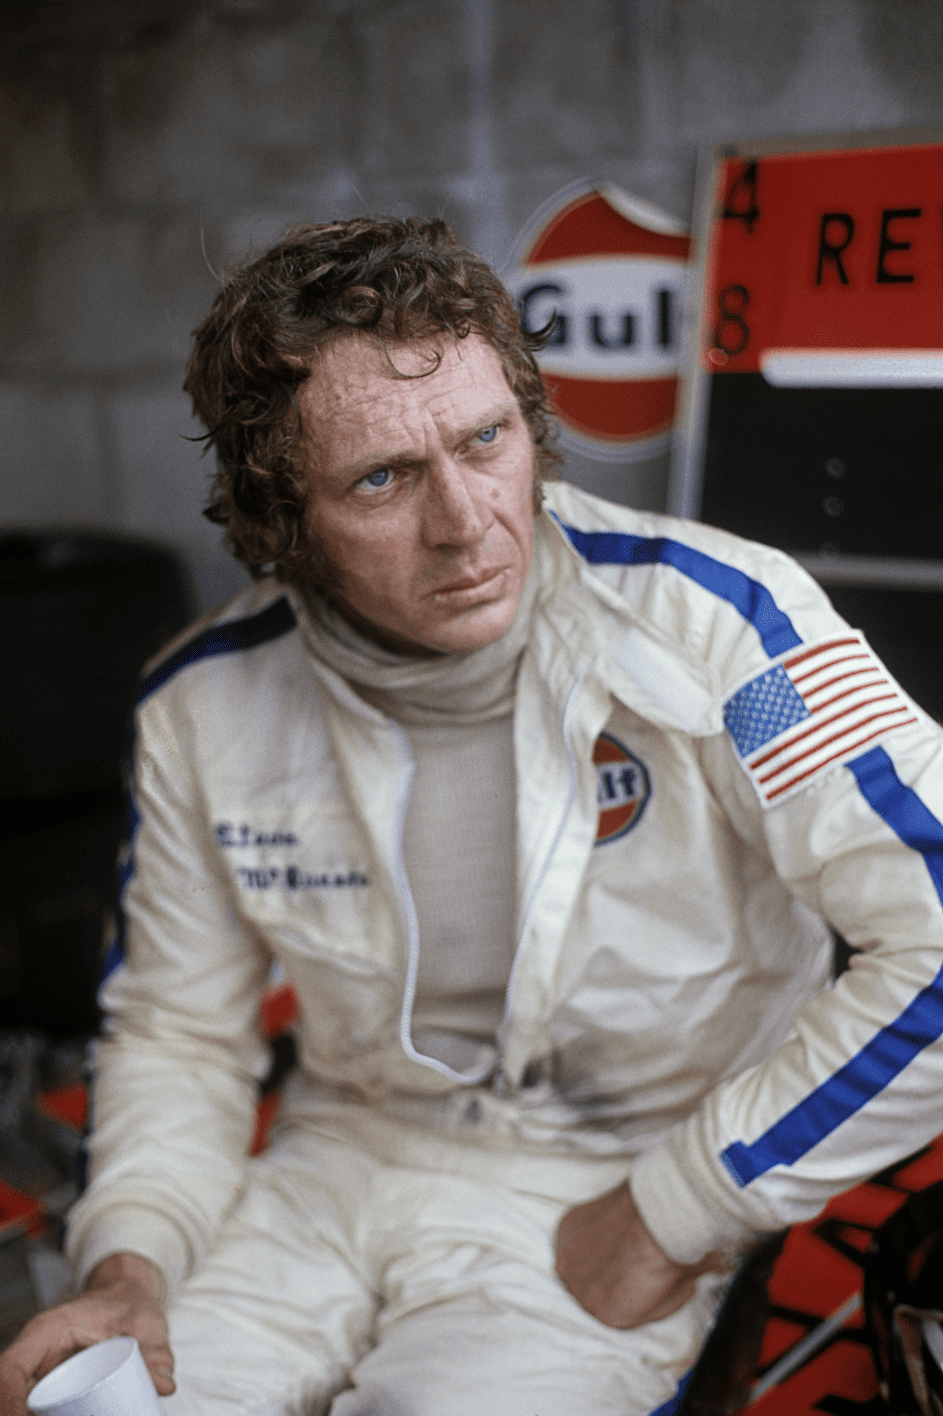 Steve McQueen 14.06.1970. Hollywood-Star Steve McQueen beim Dreh von "Le Mans". | Quelle: Getty Images